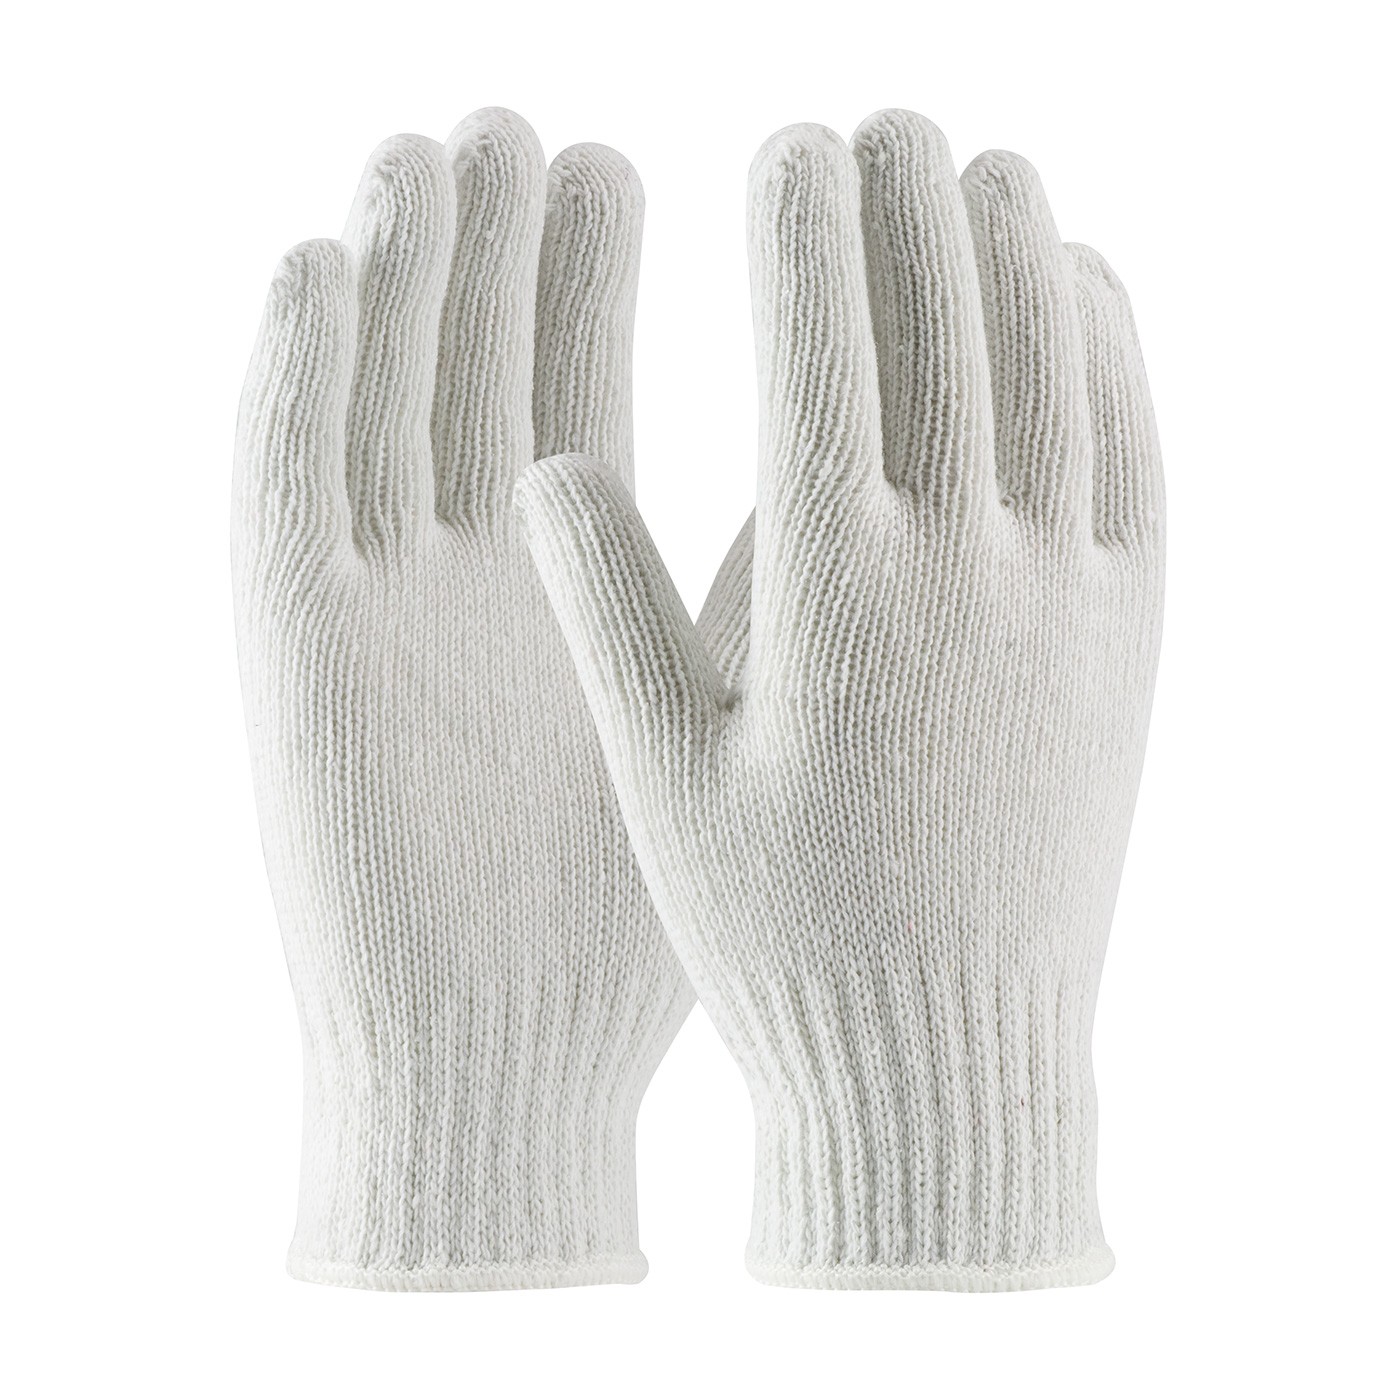 PIP® Medium Weight Seamless Knit Cotton / Polyester Glove - 7 Gauge  (#K710SBW)